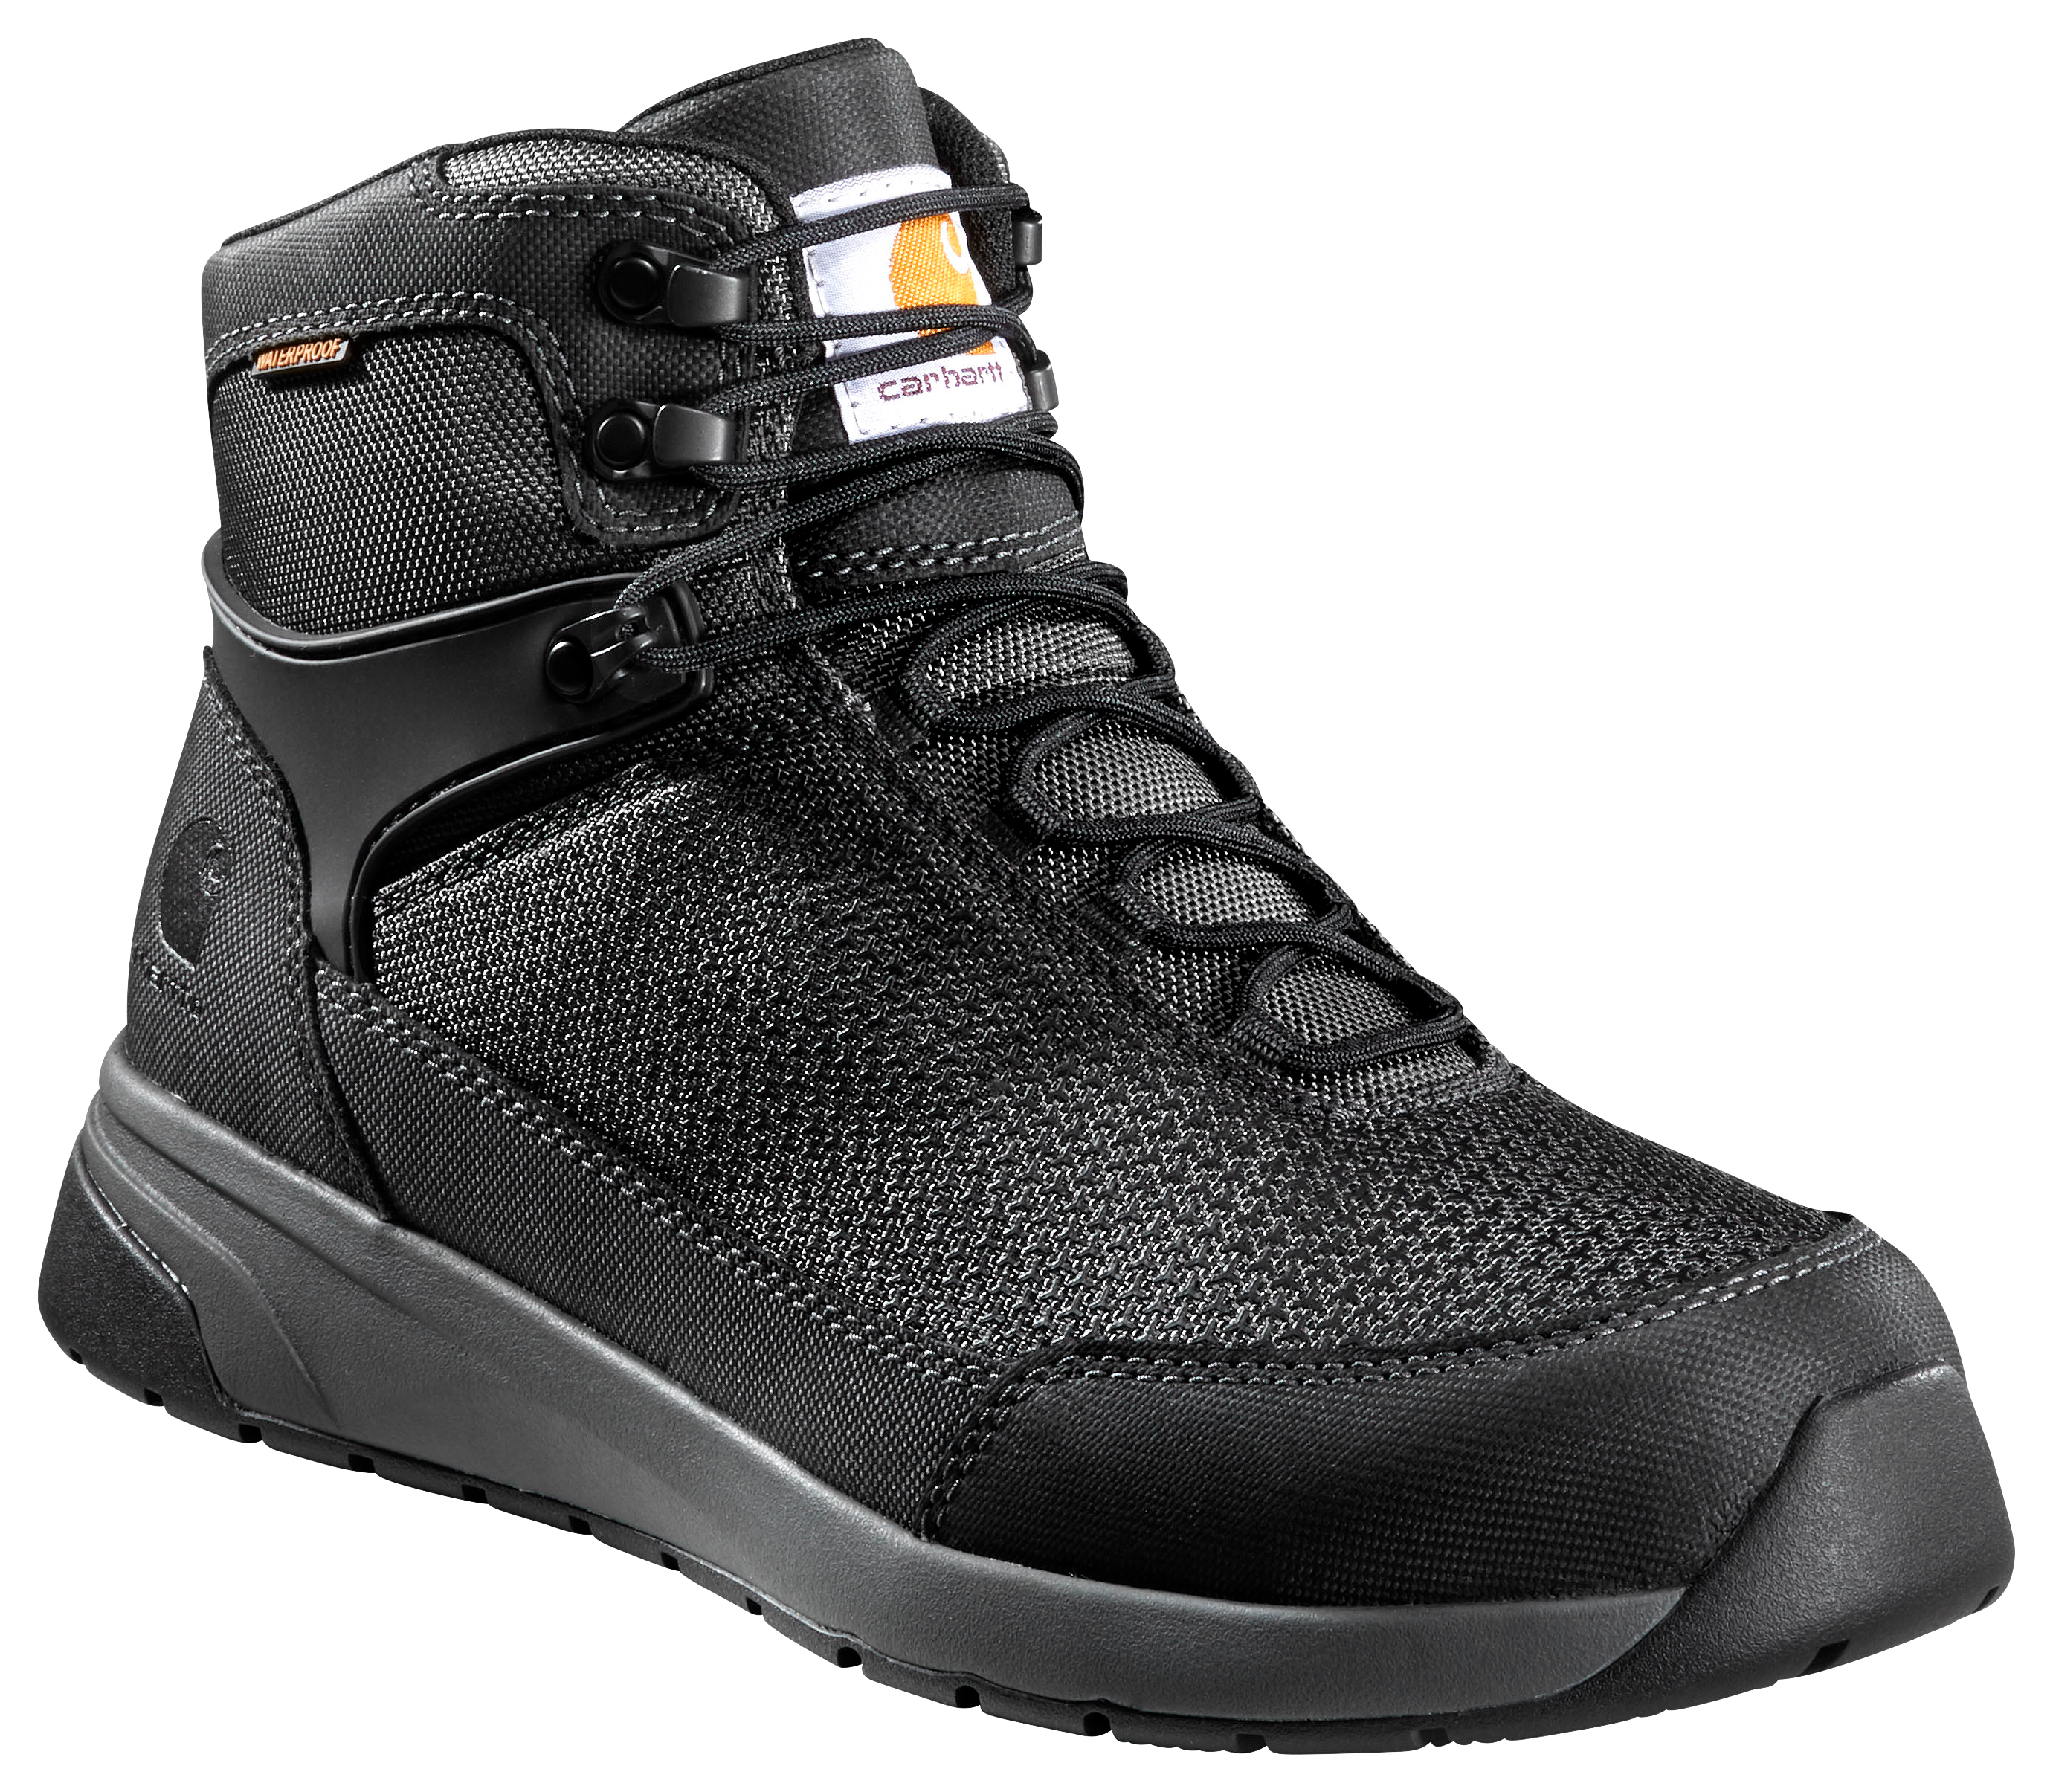 Carhartt Force 6"" Nano Composite-Toe Work Boots for Men - Black - 10W